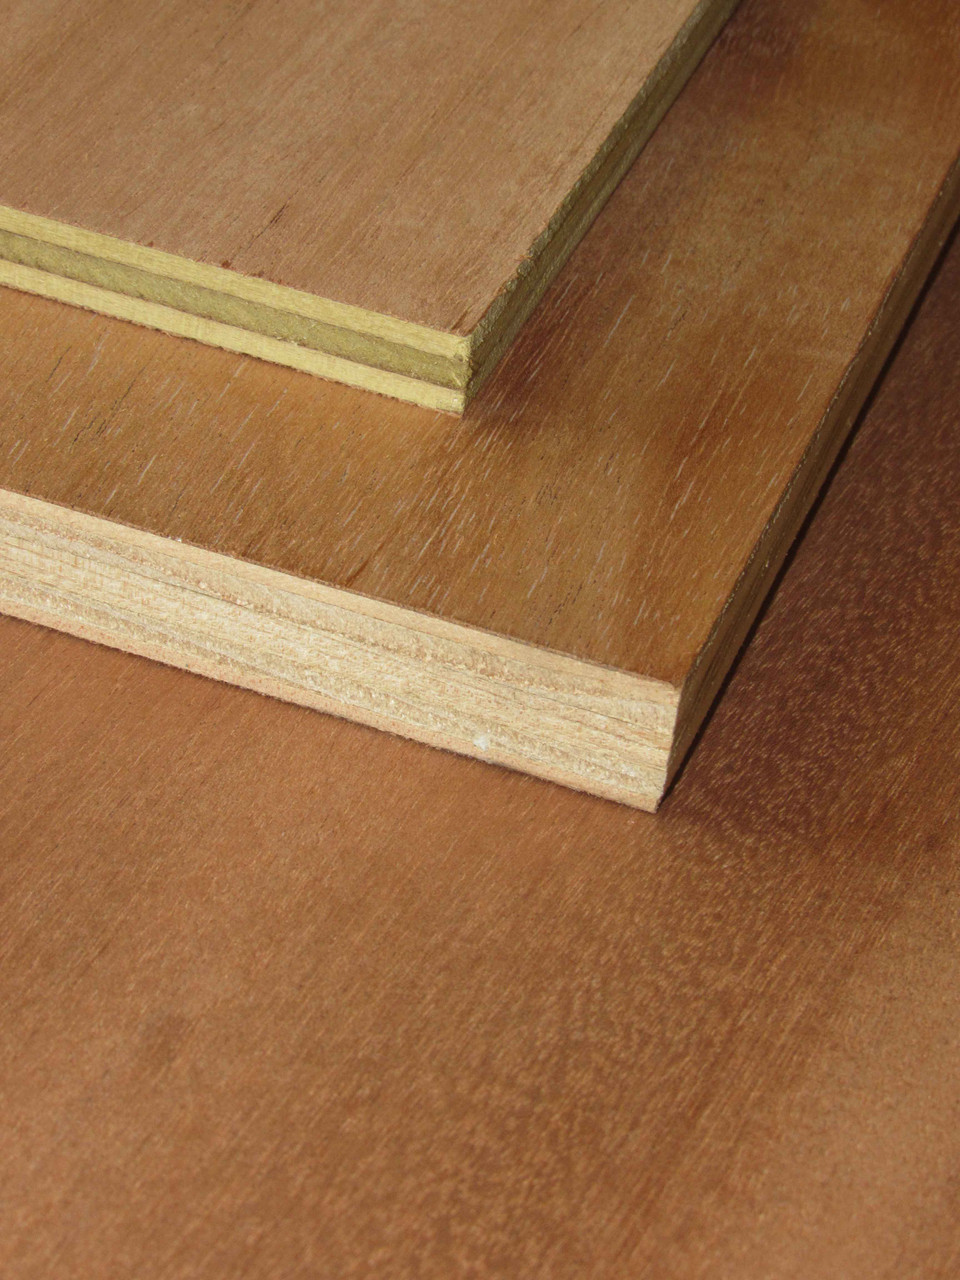 Tempered Hardboard | Capitol City Lumber